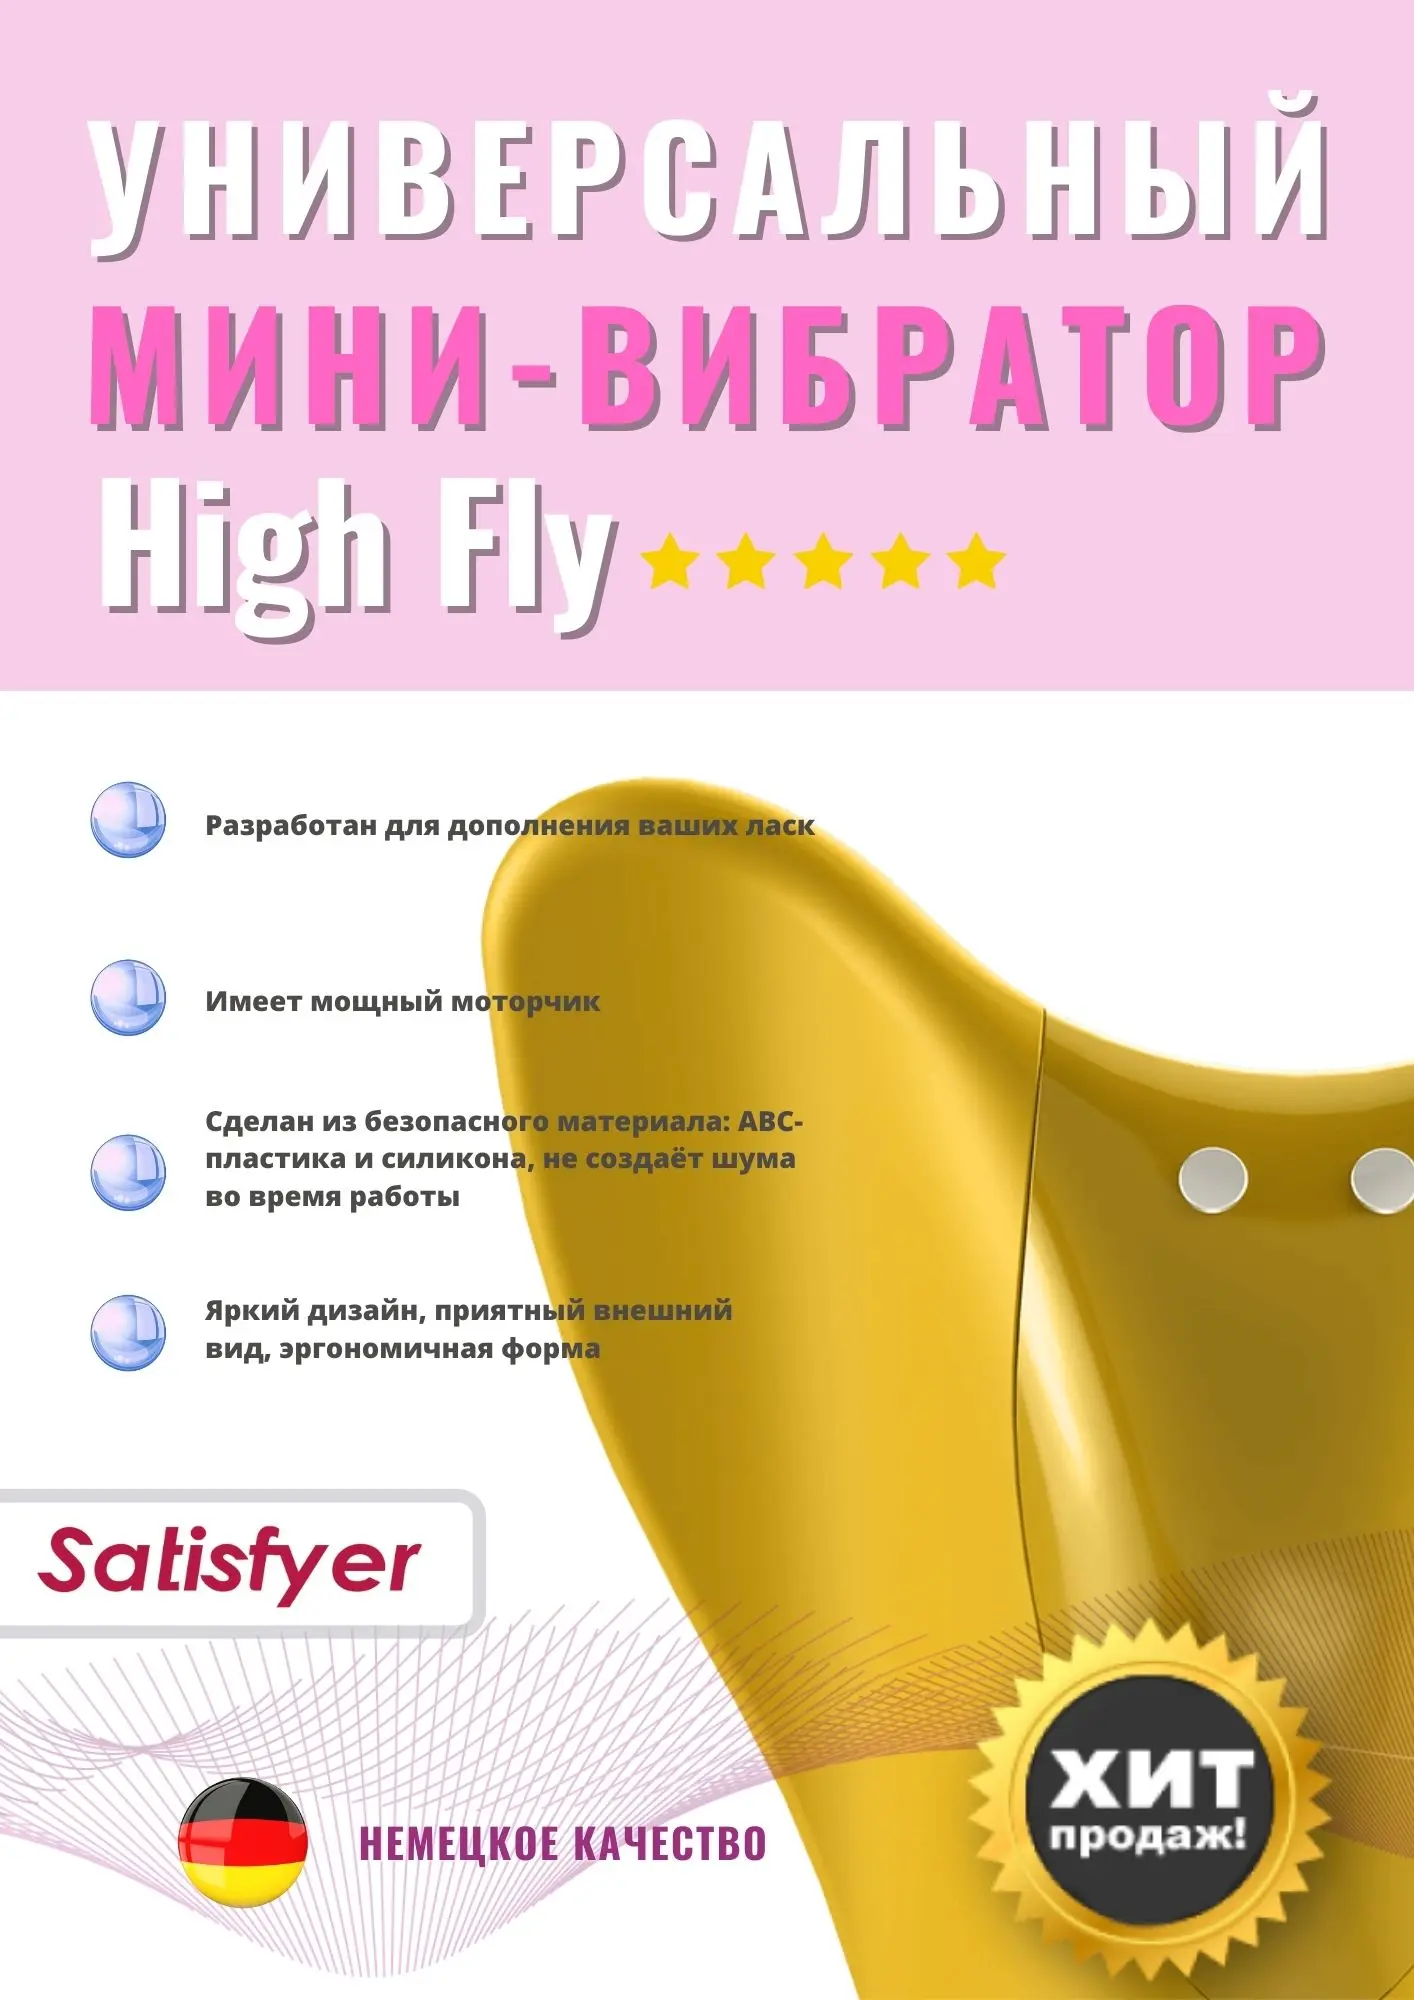 Satisfyer High Fly Вибратор